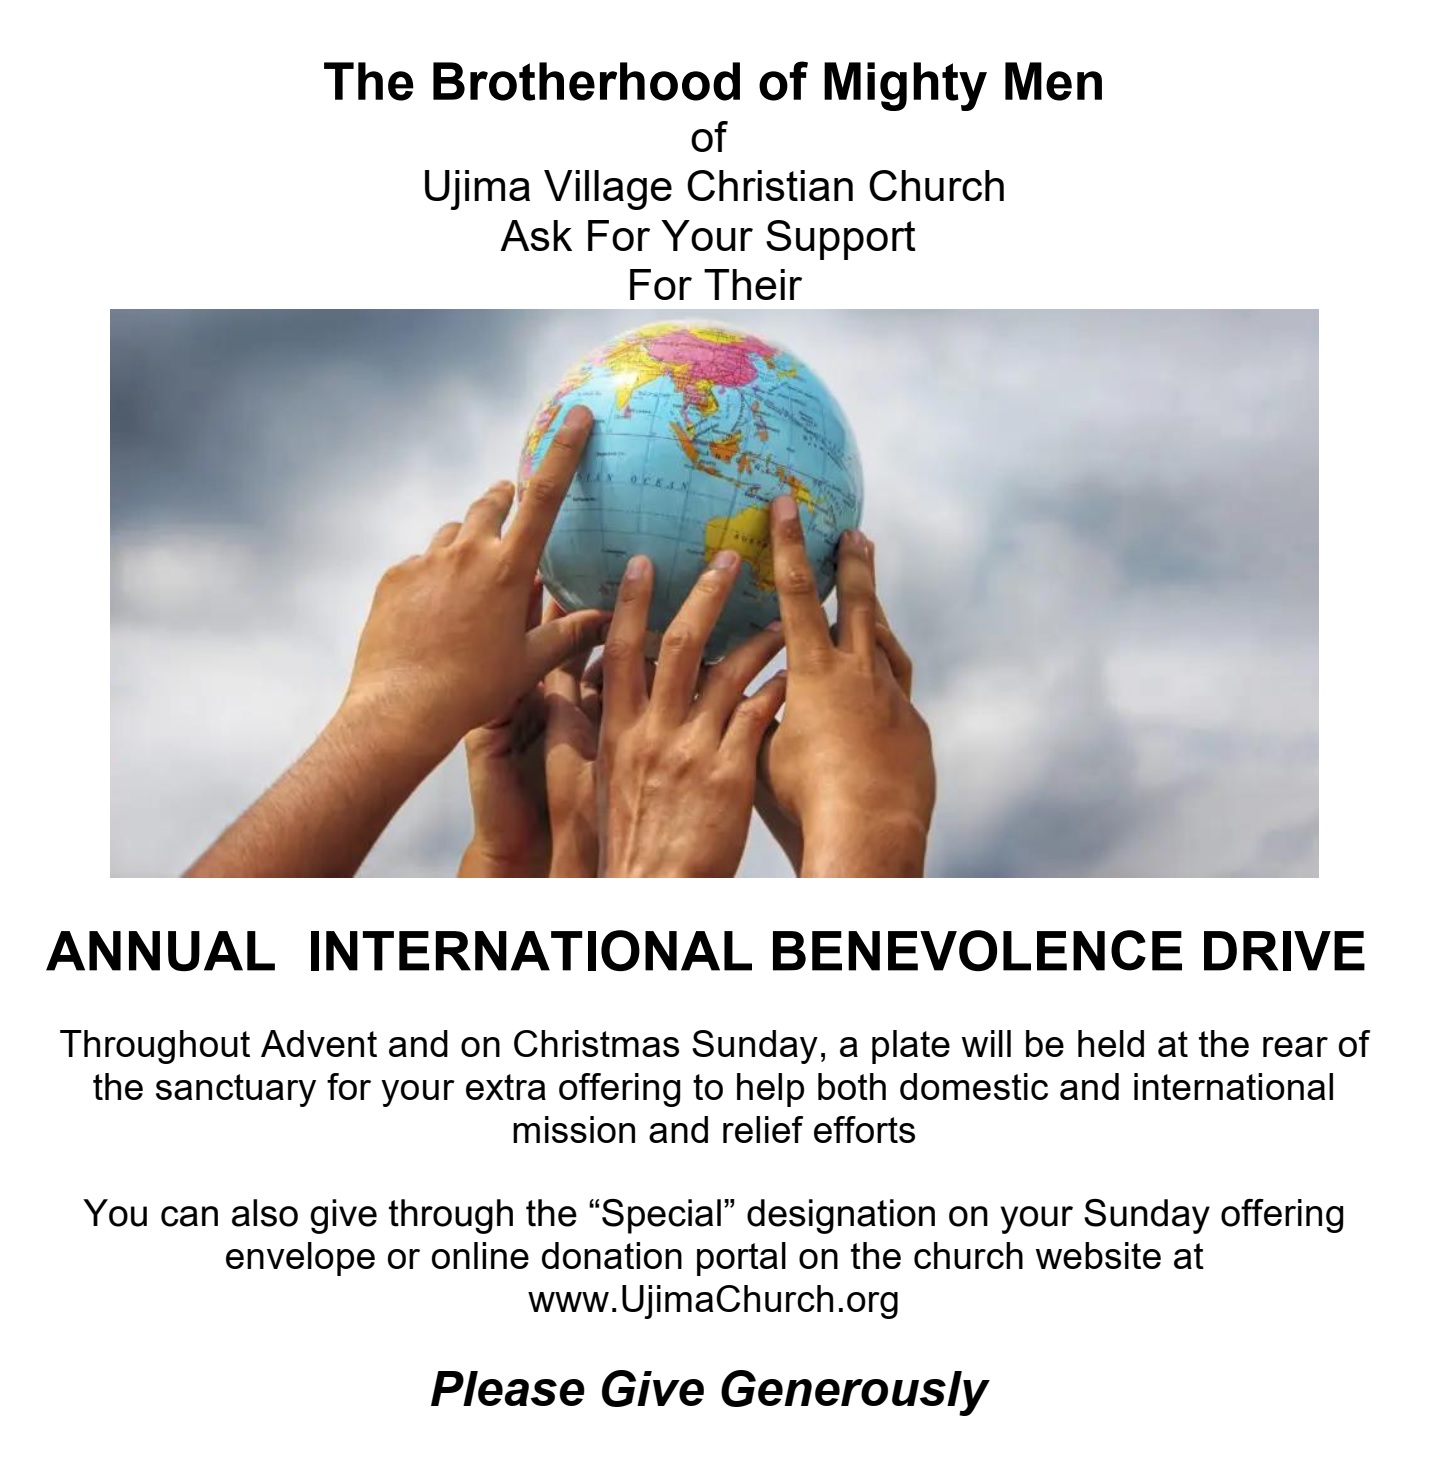 Annual International Benevolence Drive